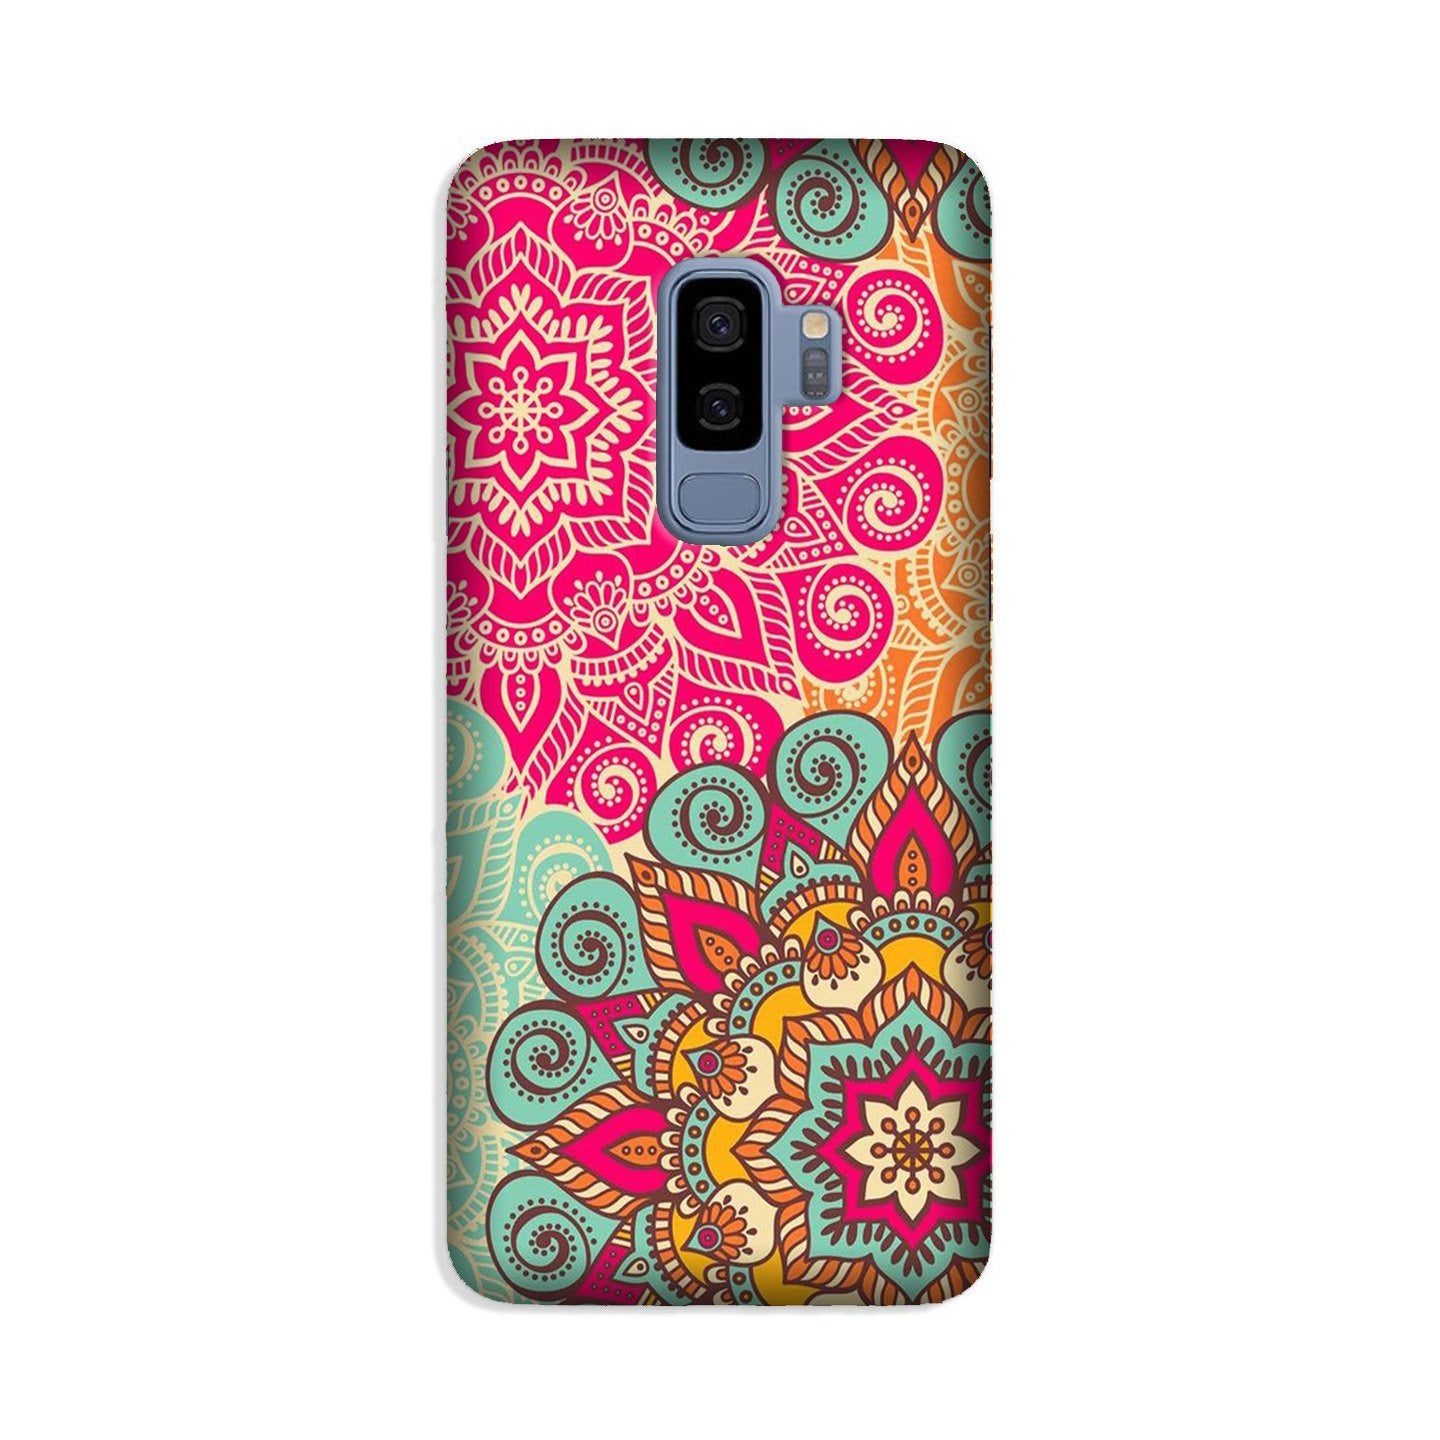 Rangoli art Case for Galaxy S9 Plus